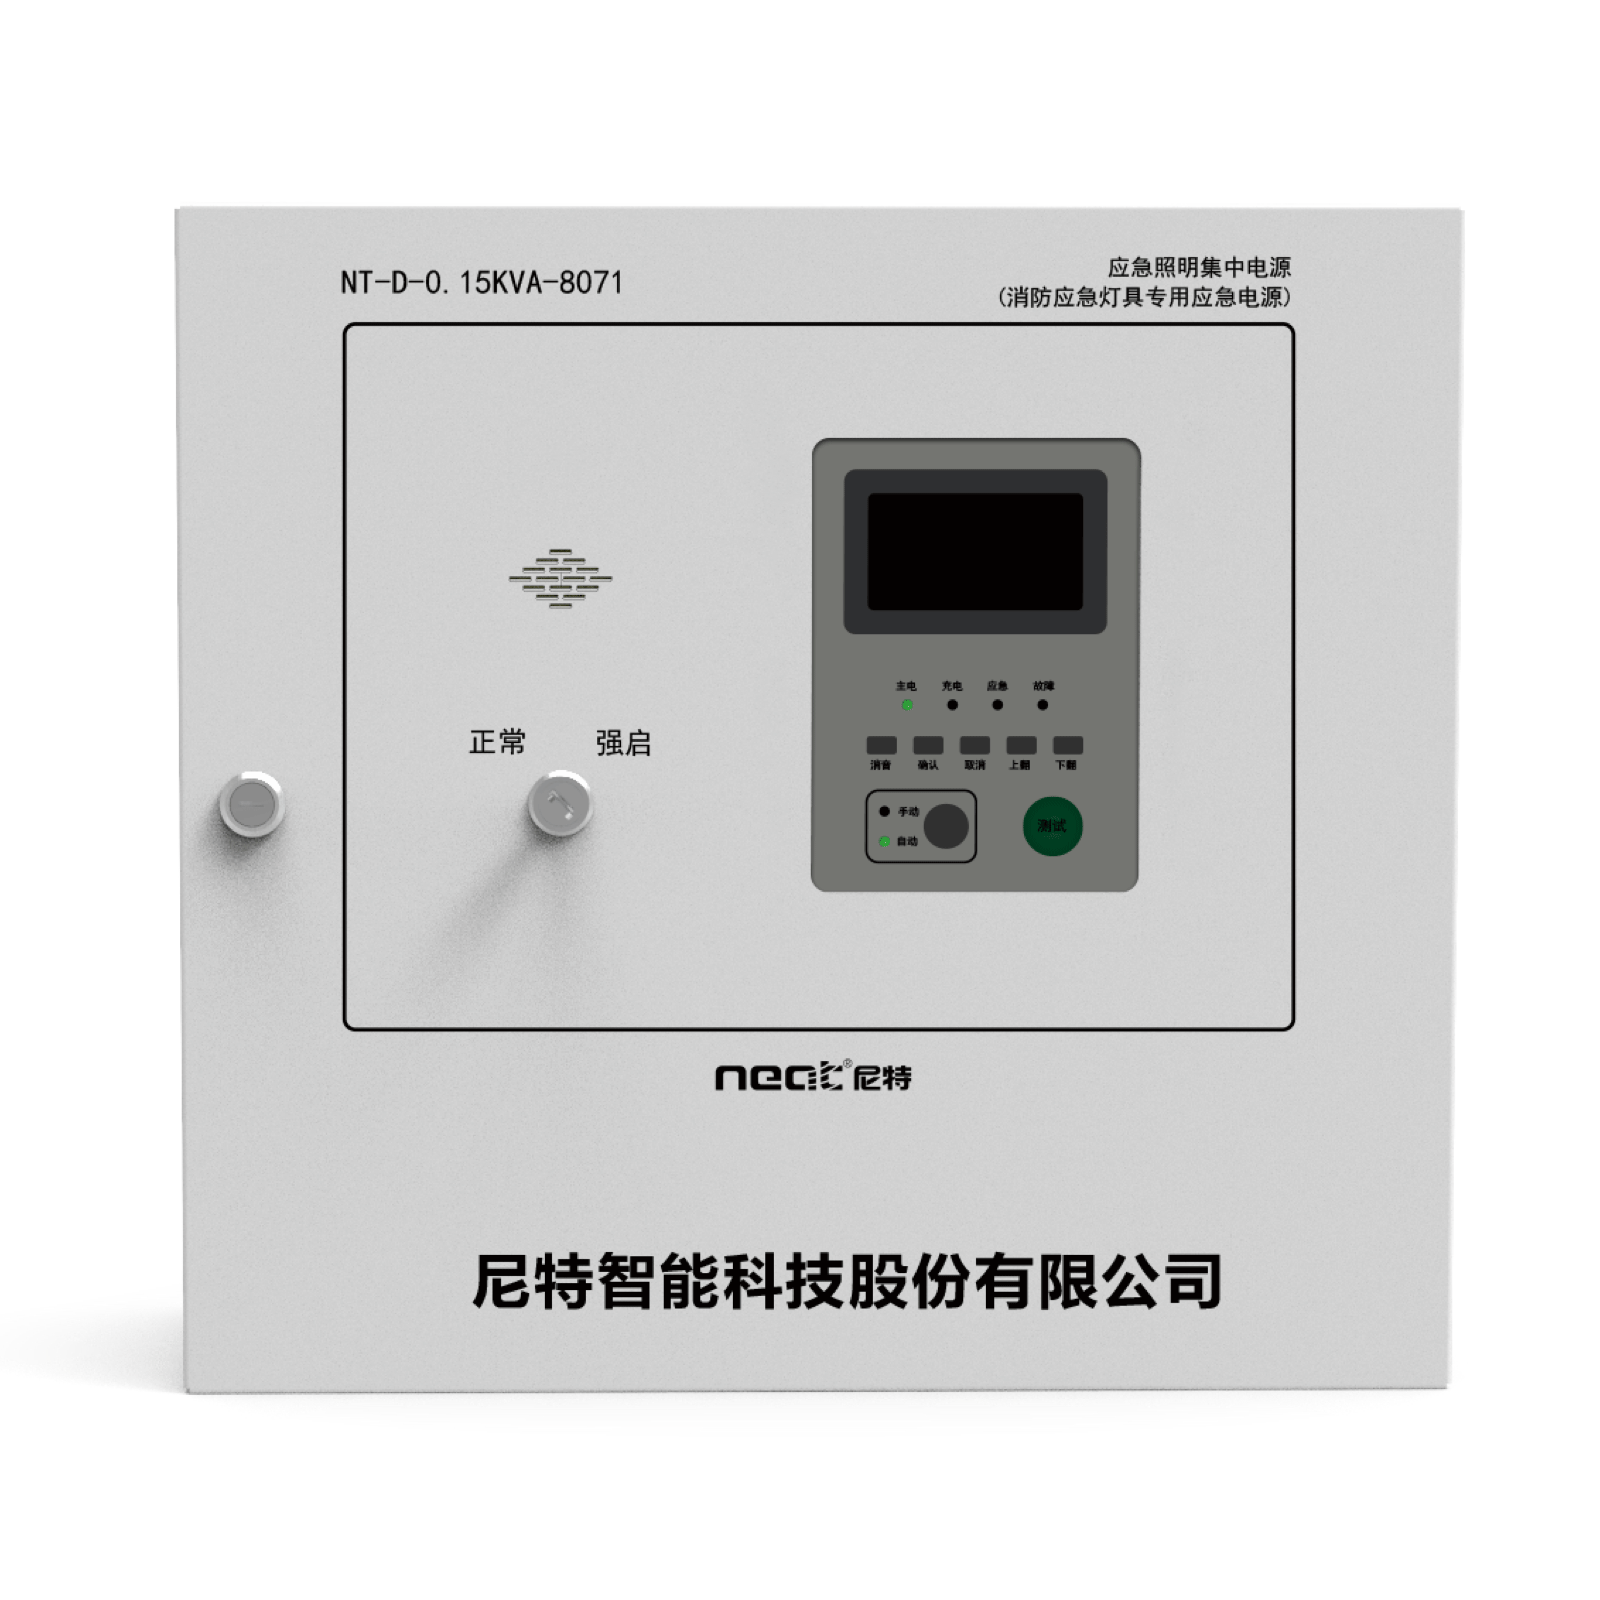 NT-D-0.15KVA-8071应急照明集中电源